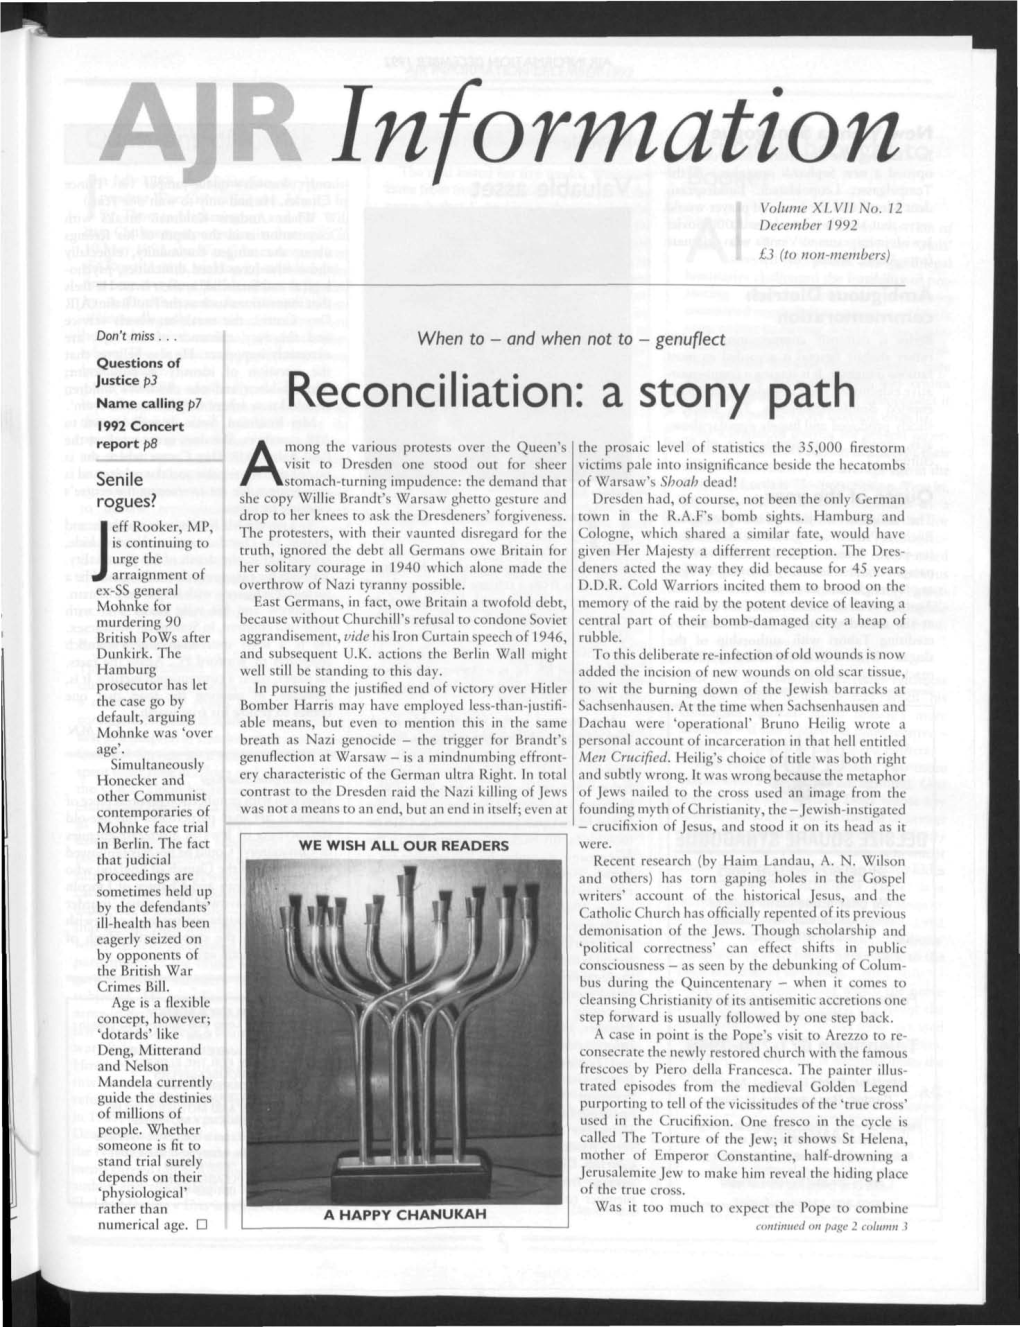 Reconciliation: a Stony Path